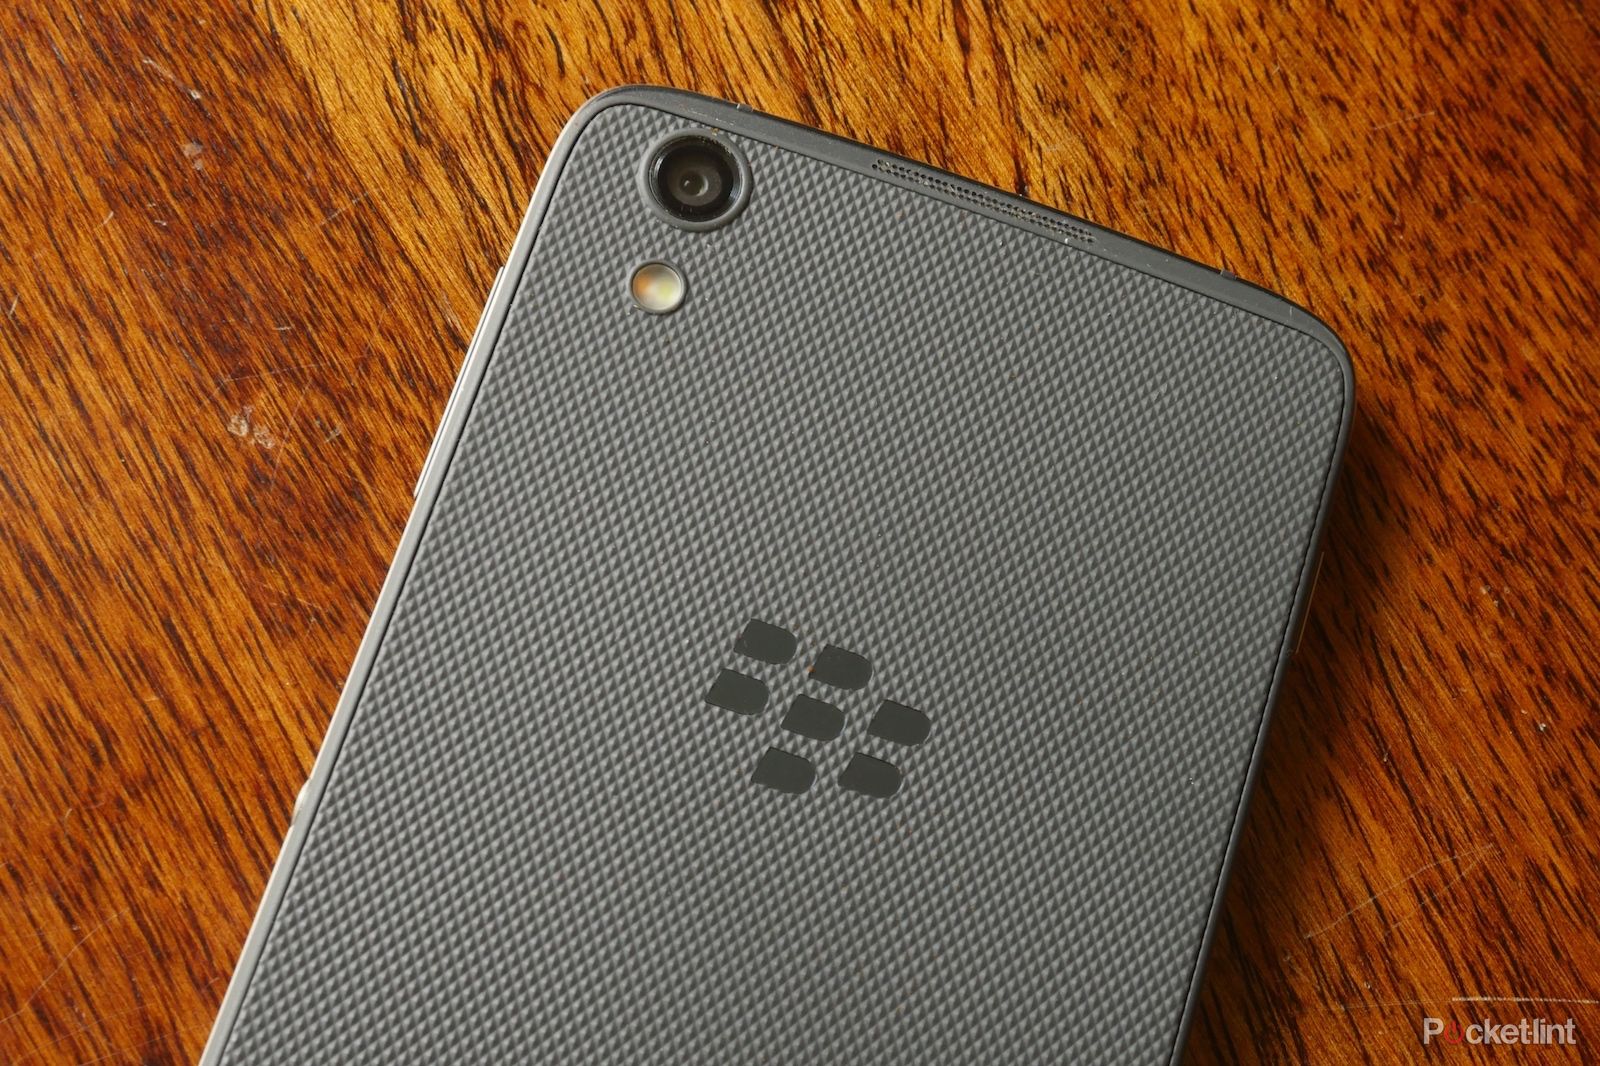 blackberry dtek50 review image 26